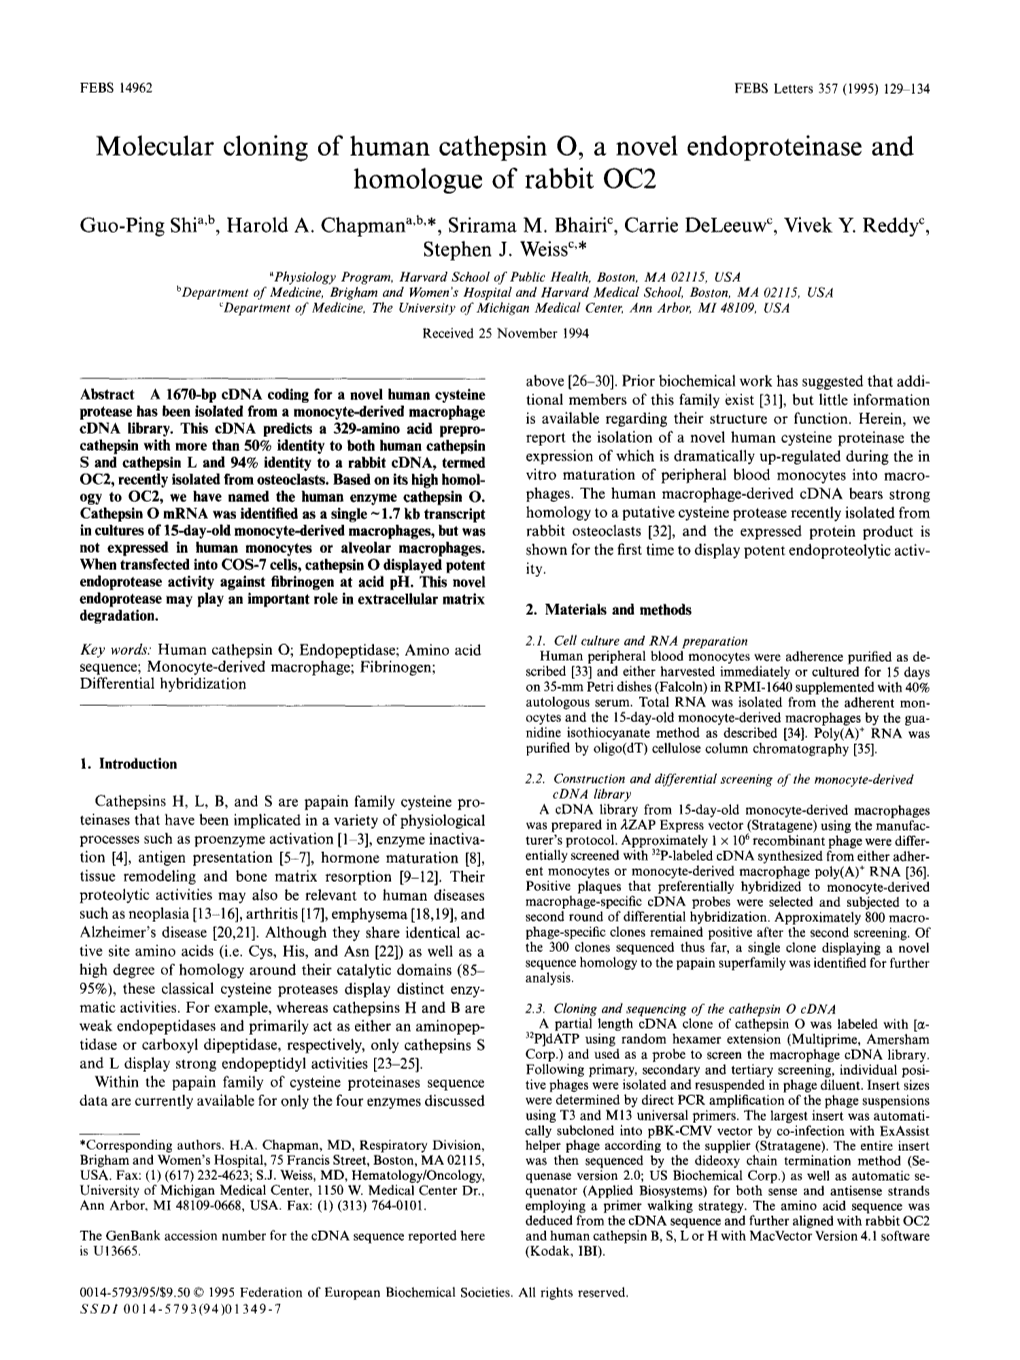 Molecular Cloning of Human Cathepsin O, a Novel Endoproteinase and Homologue of Rabbit OC2 Guo-Ping Shi A'b, Harold A